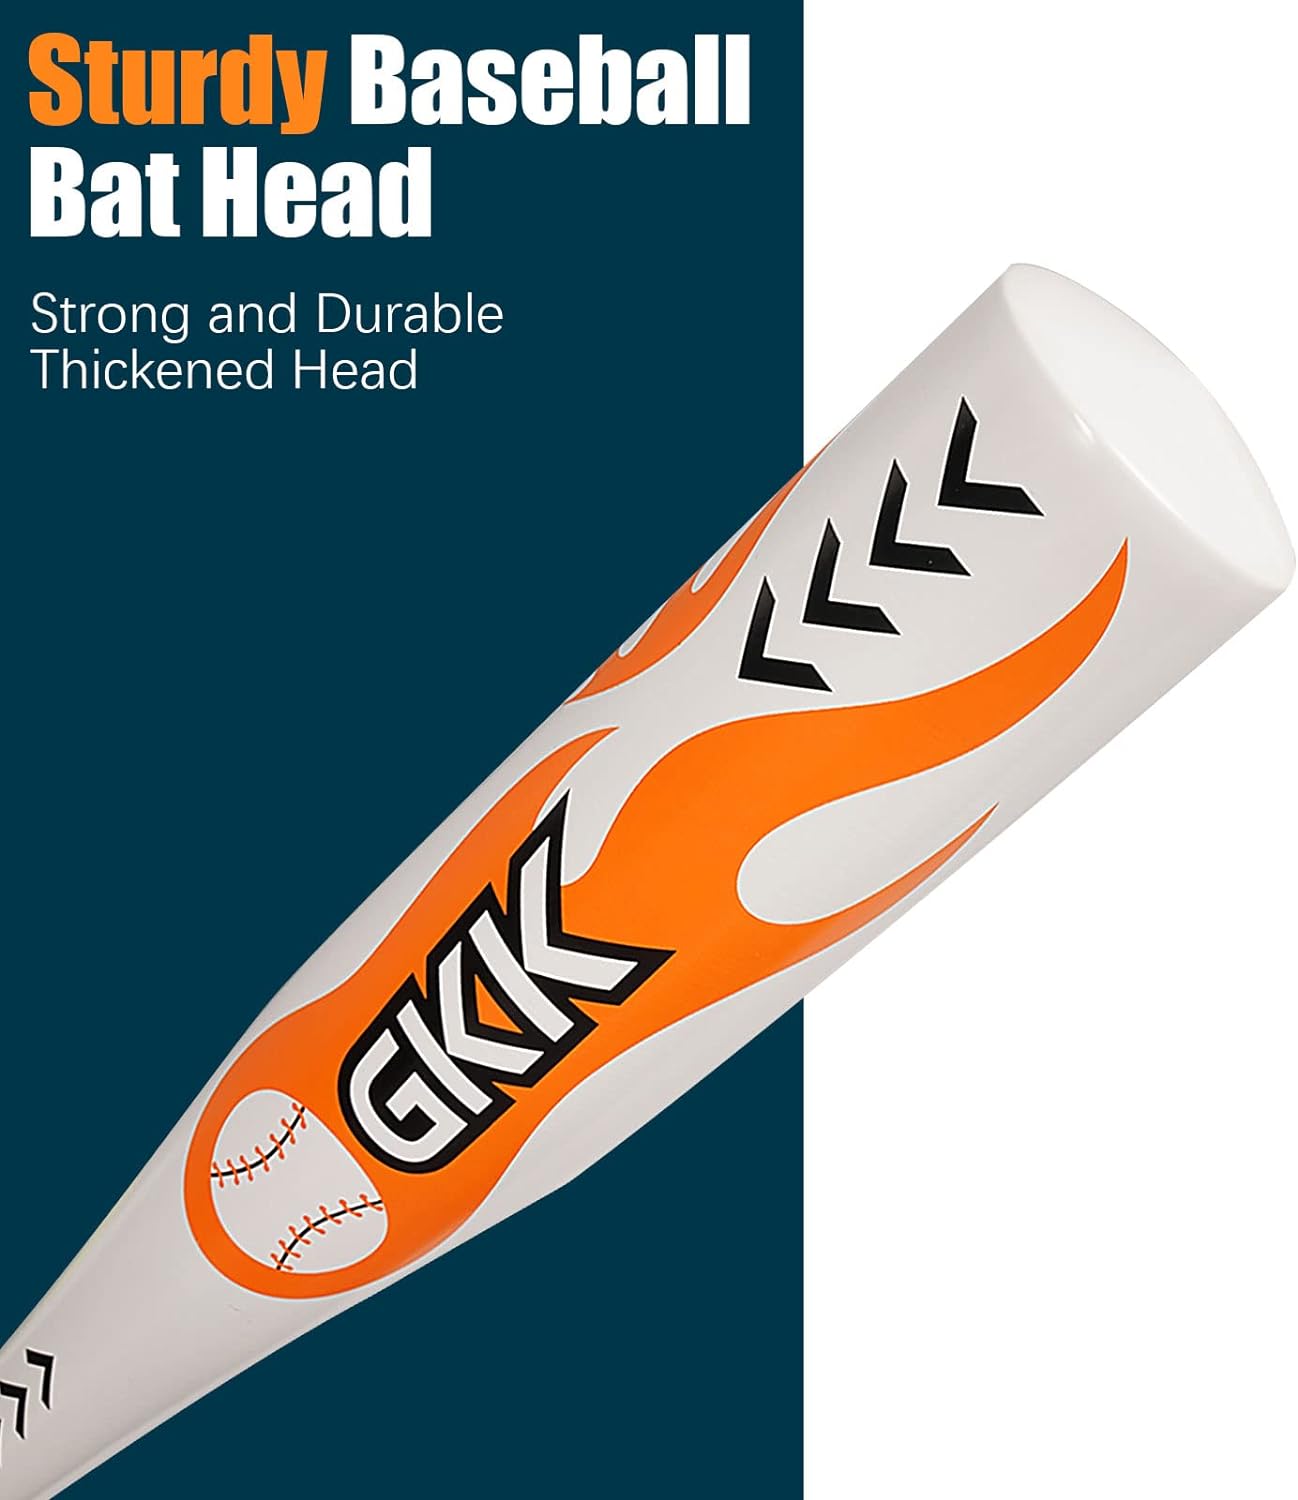 GKK Baseball Bat Kids Baseball Bat Series |-11| Tee Ball Bat Lightweight Batting Practice Bat Baseball Training Equipment |1 Pc. Aluminum| 2 1/4 Barrel | 24, 25, 26